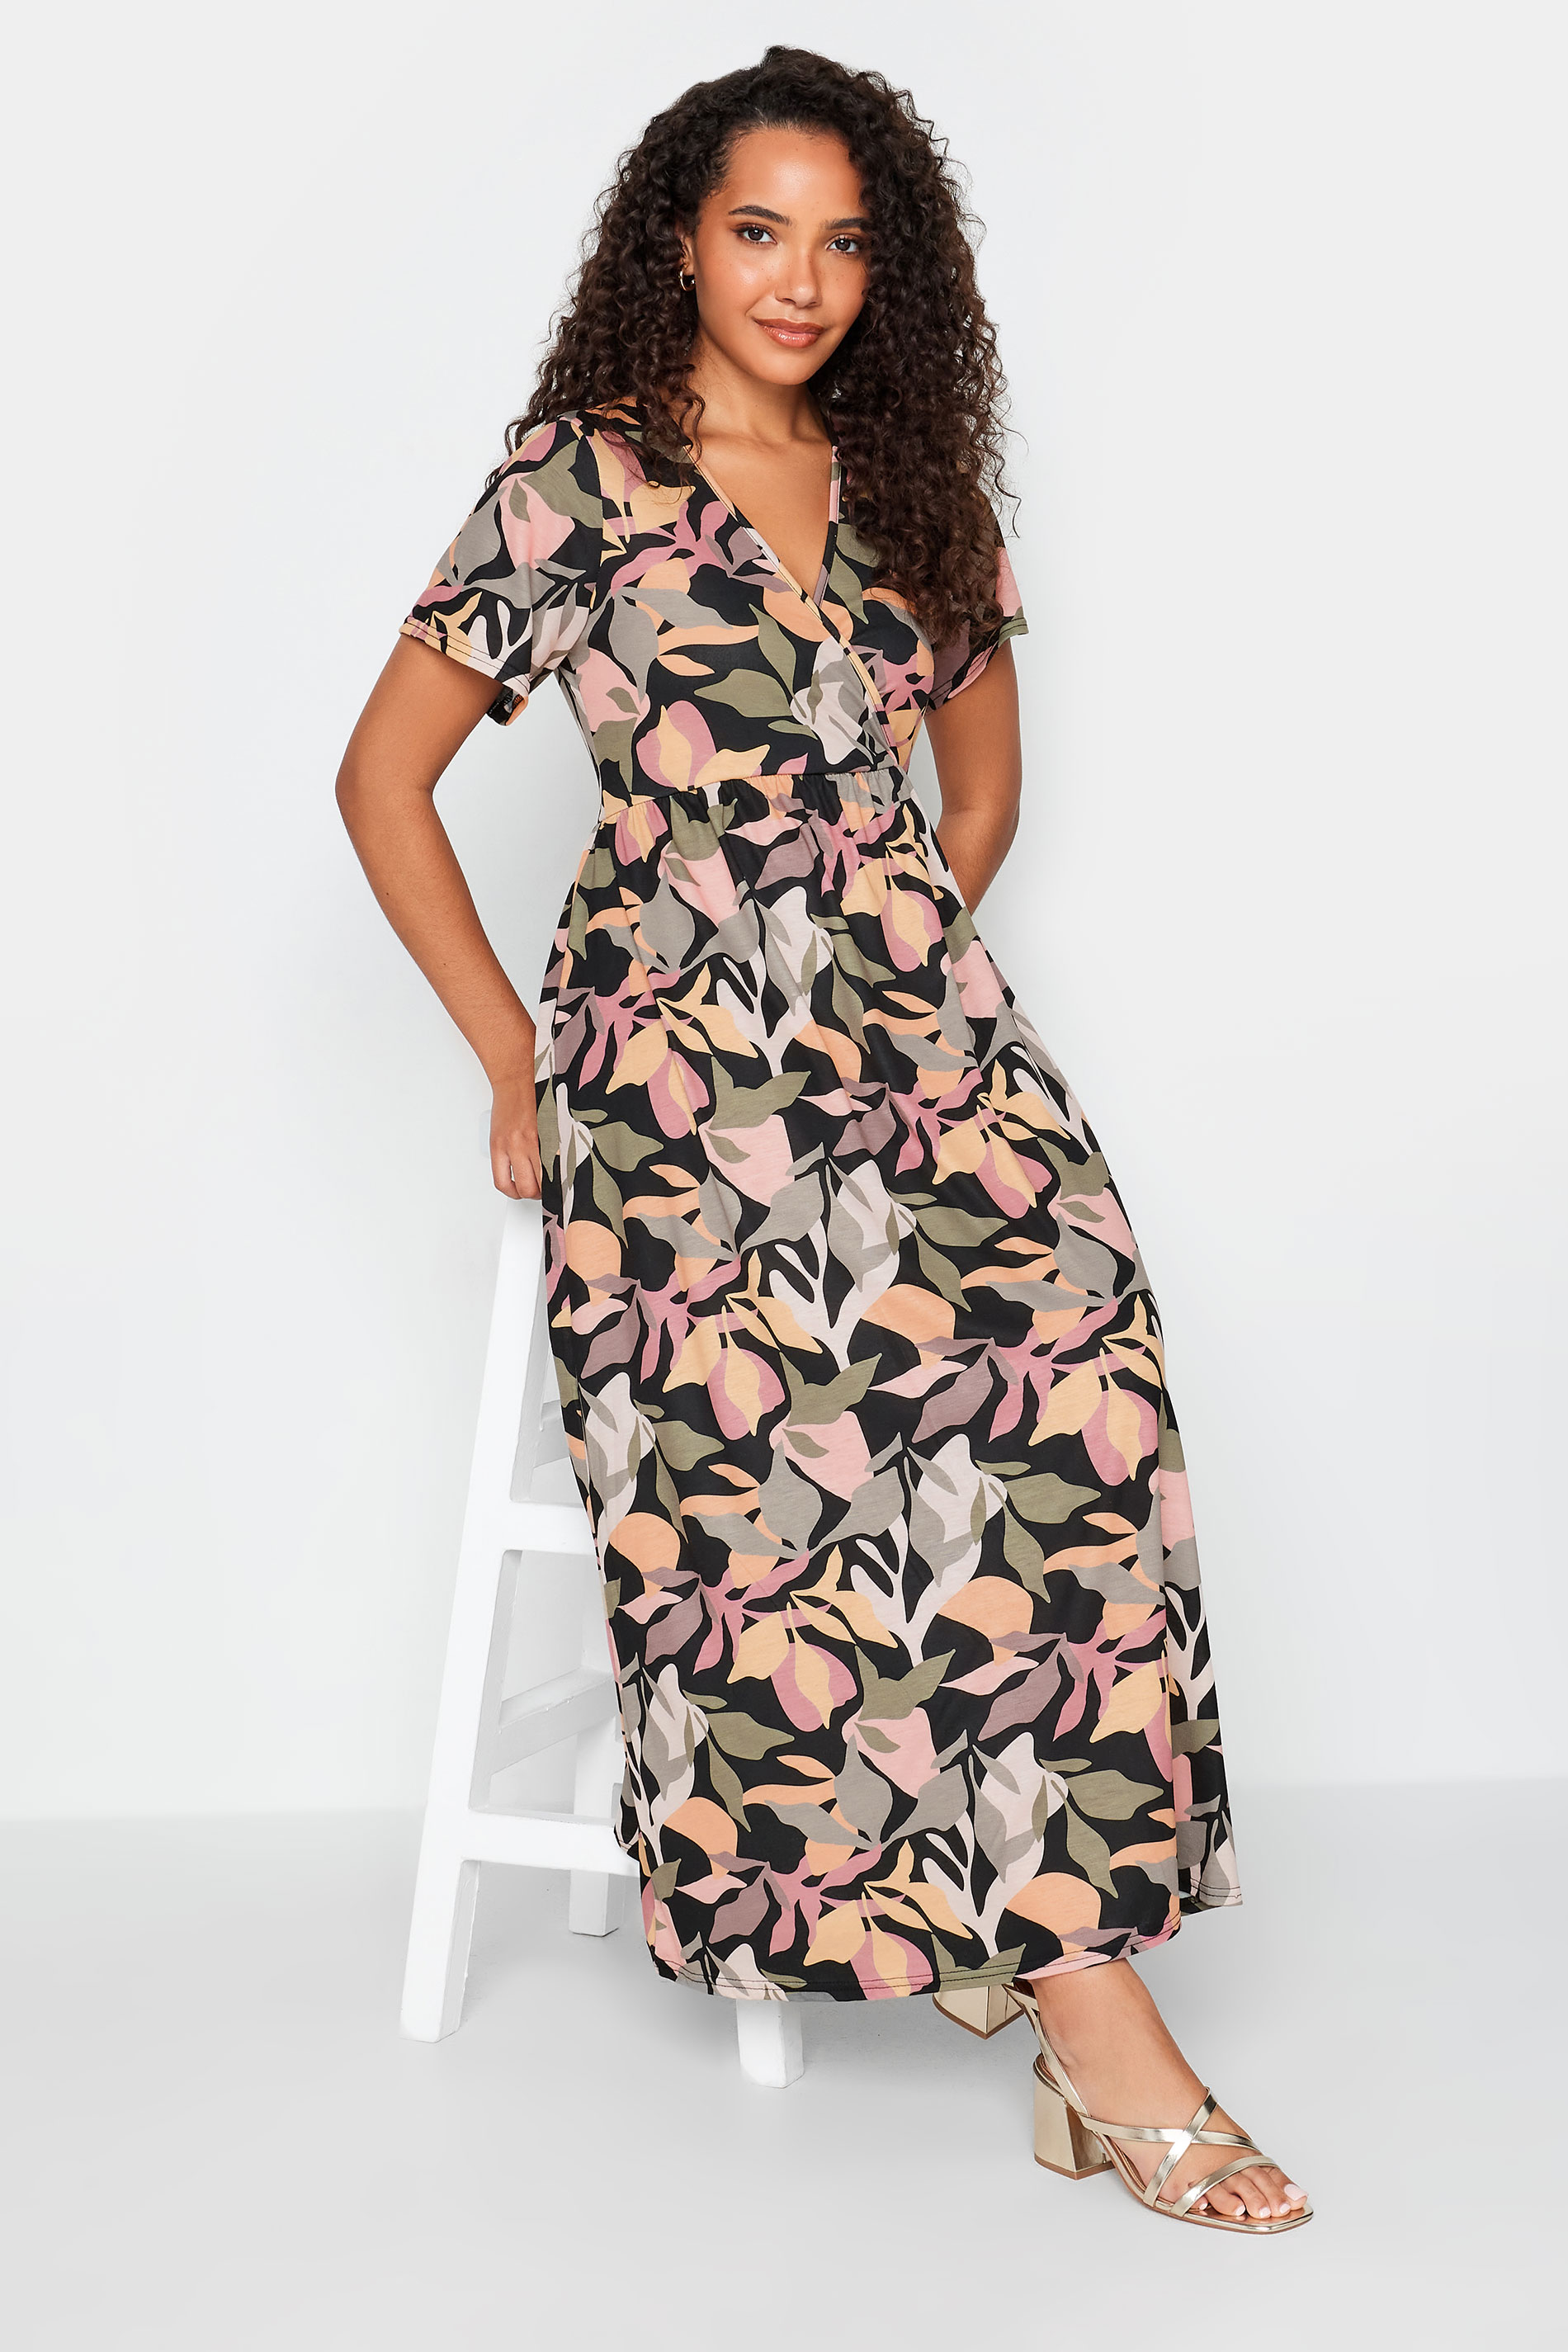 M&Co Black Tropical Print Maxi Dress | M&Co  1